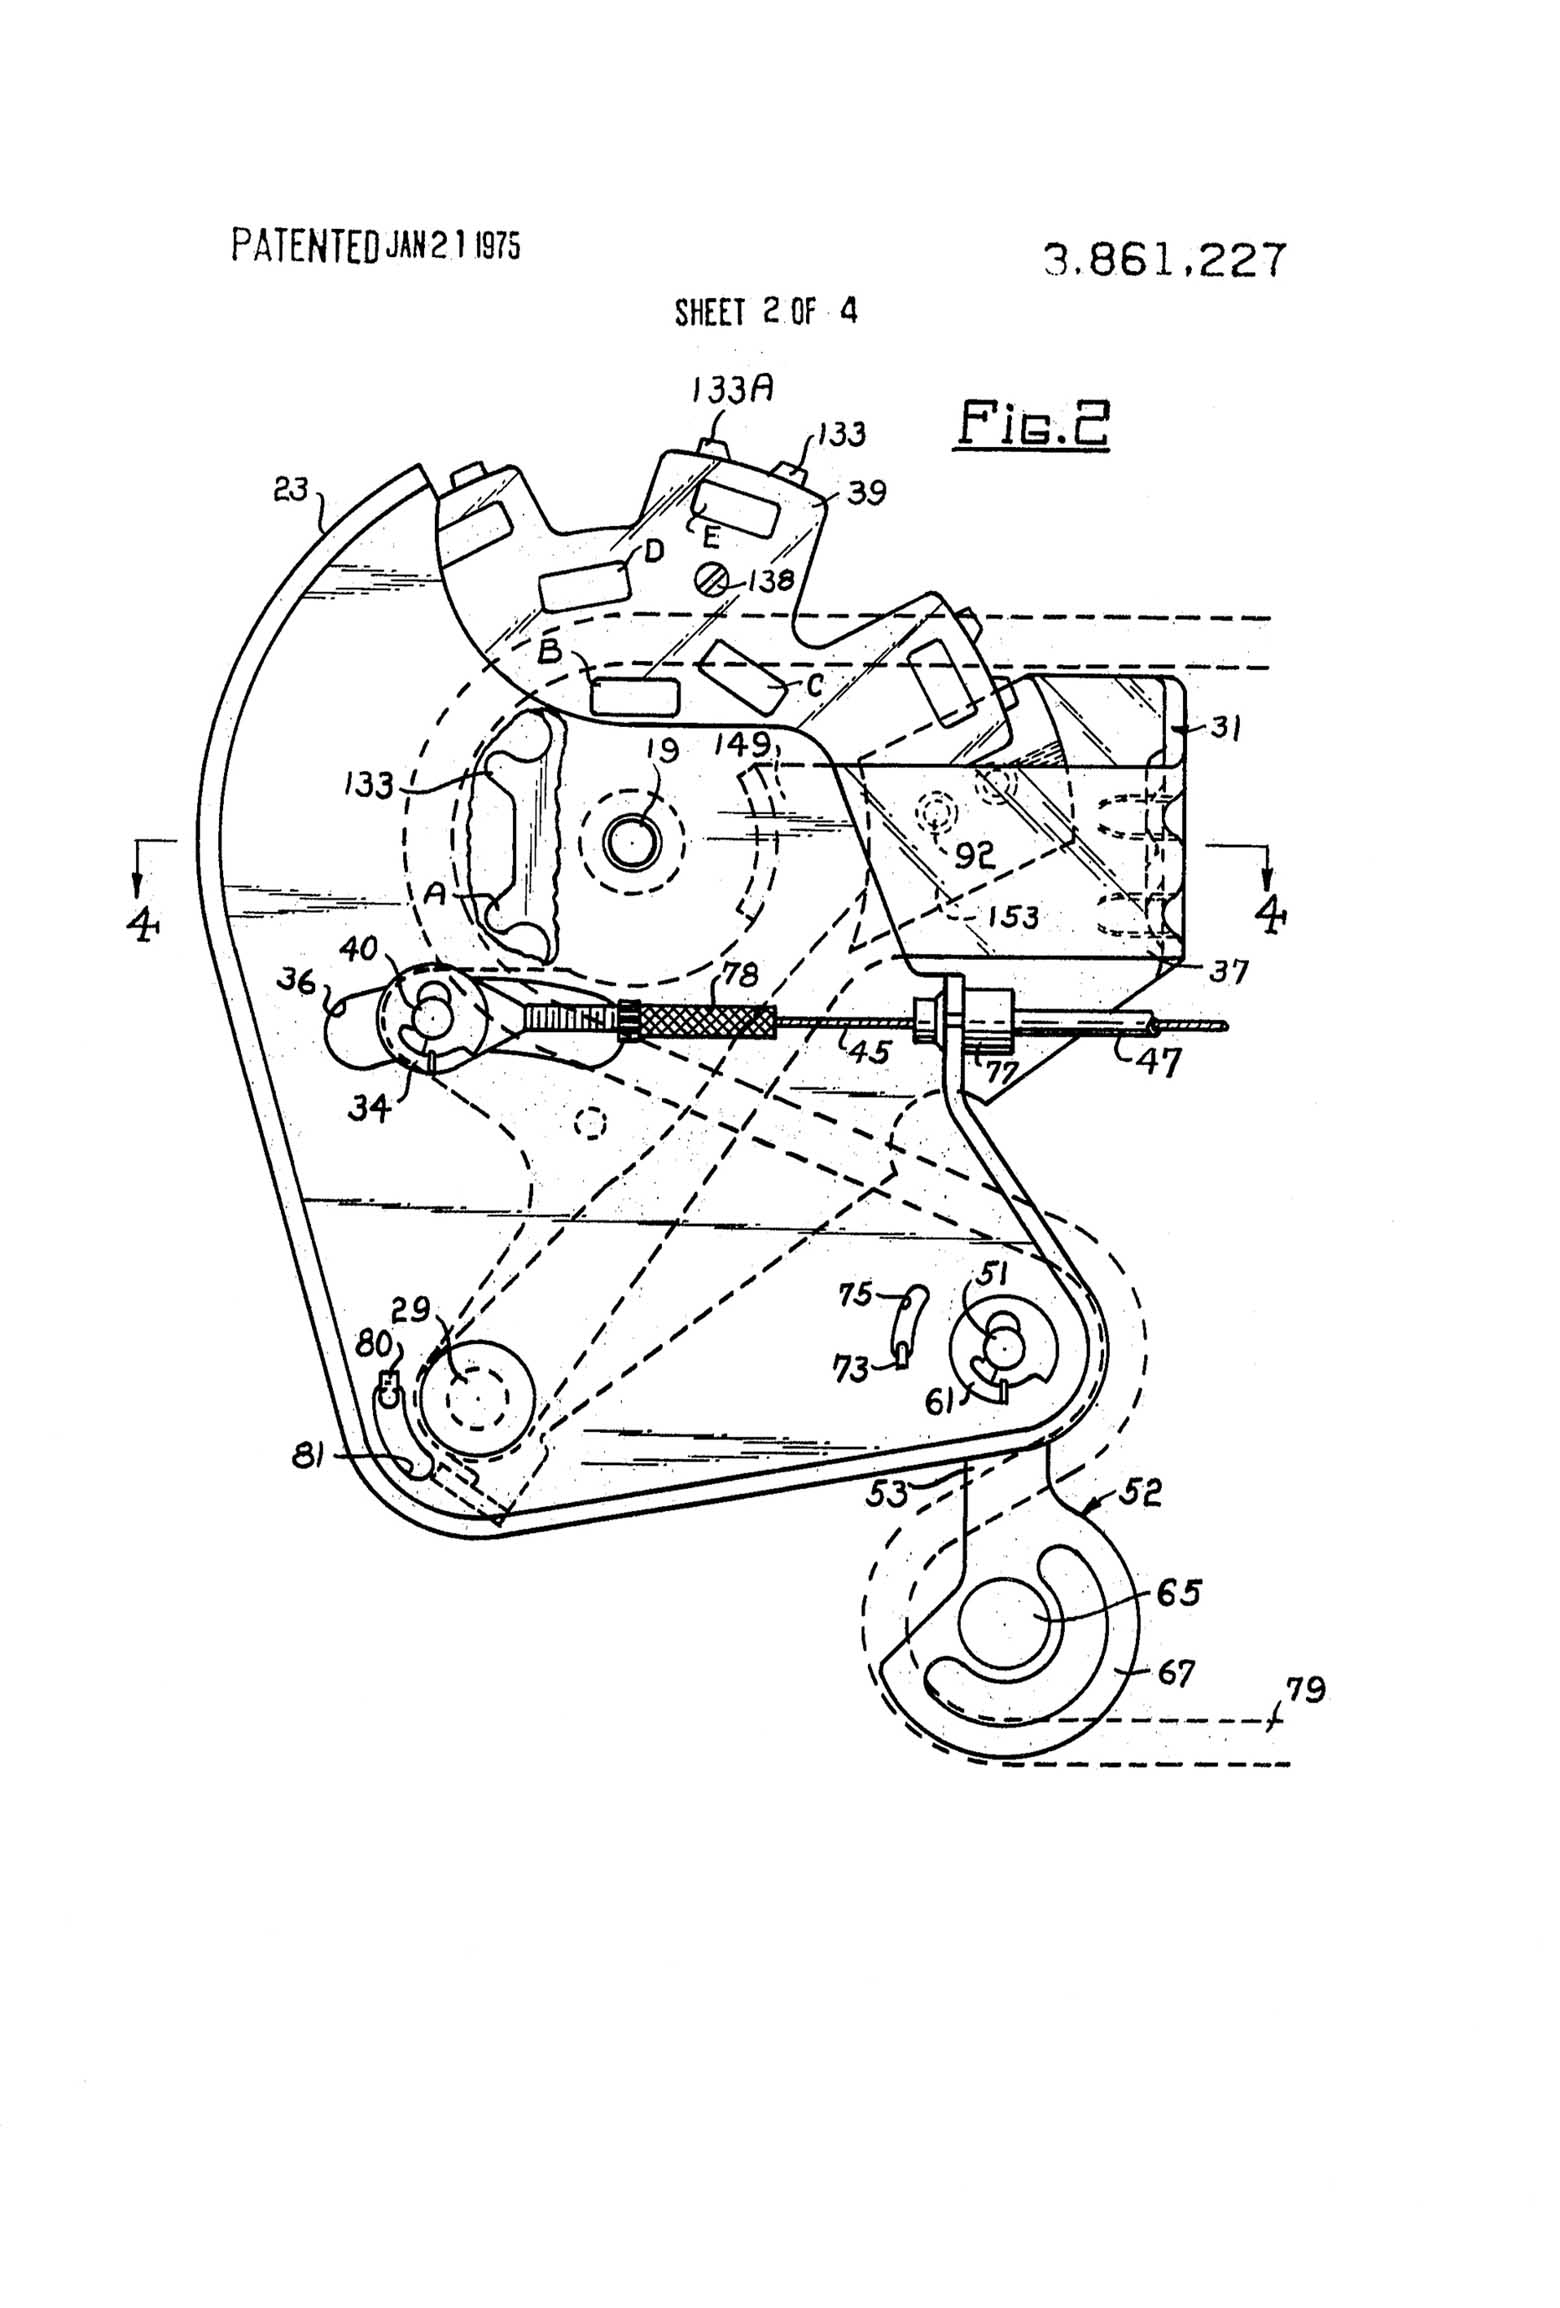 US Patent 3,861,227 - Tokheim scan 09 main image